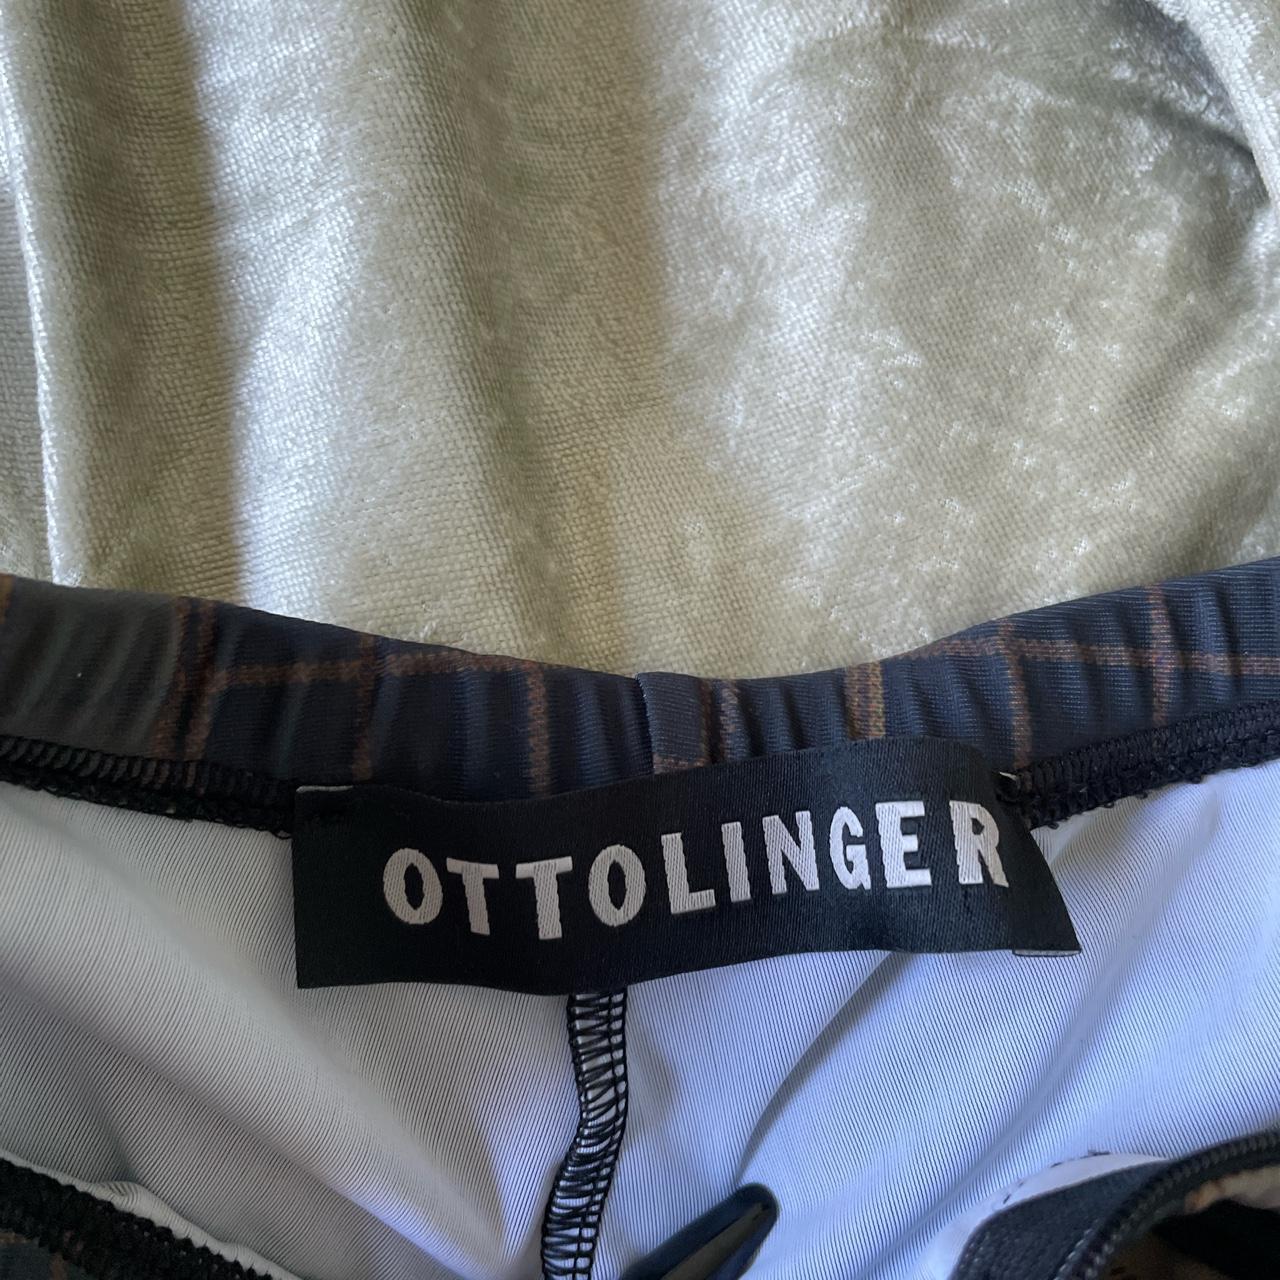 Product Image 3 - Ottolinger Pants XS

Great condition!

#ottolinger